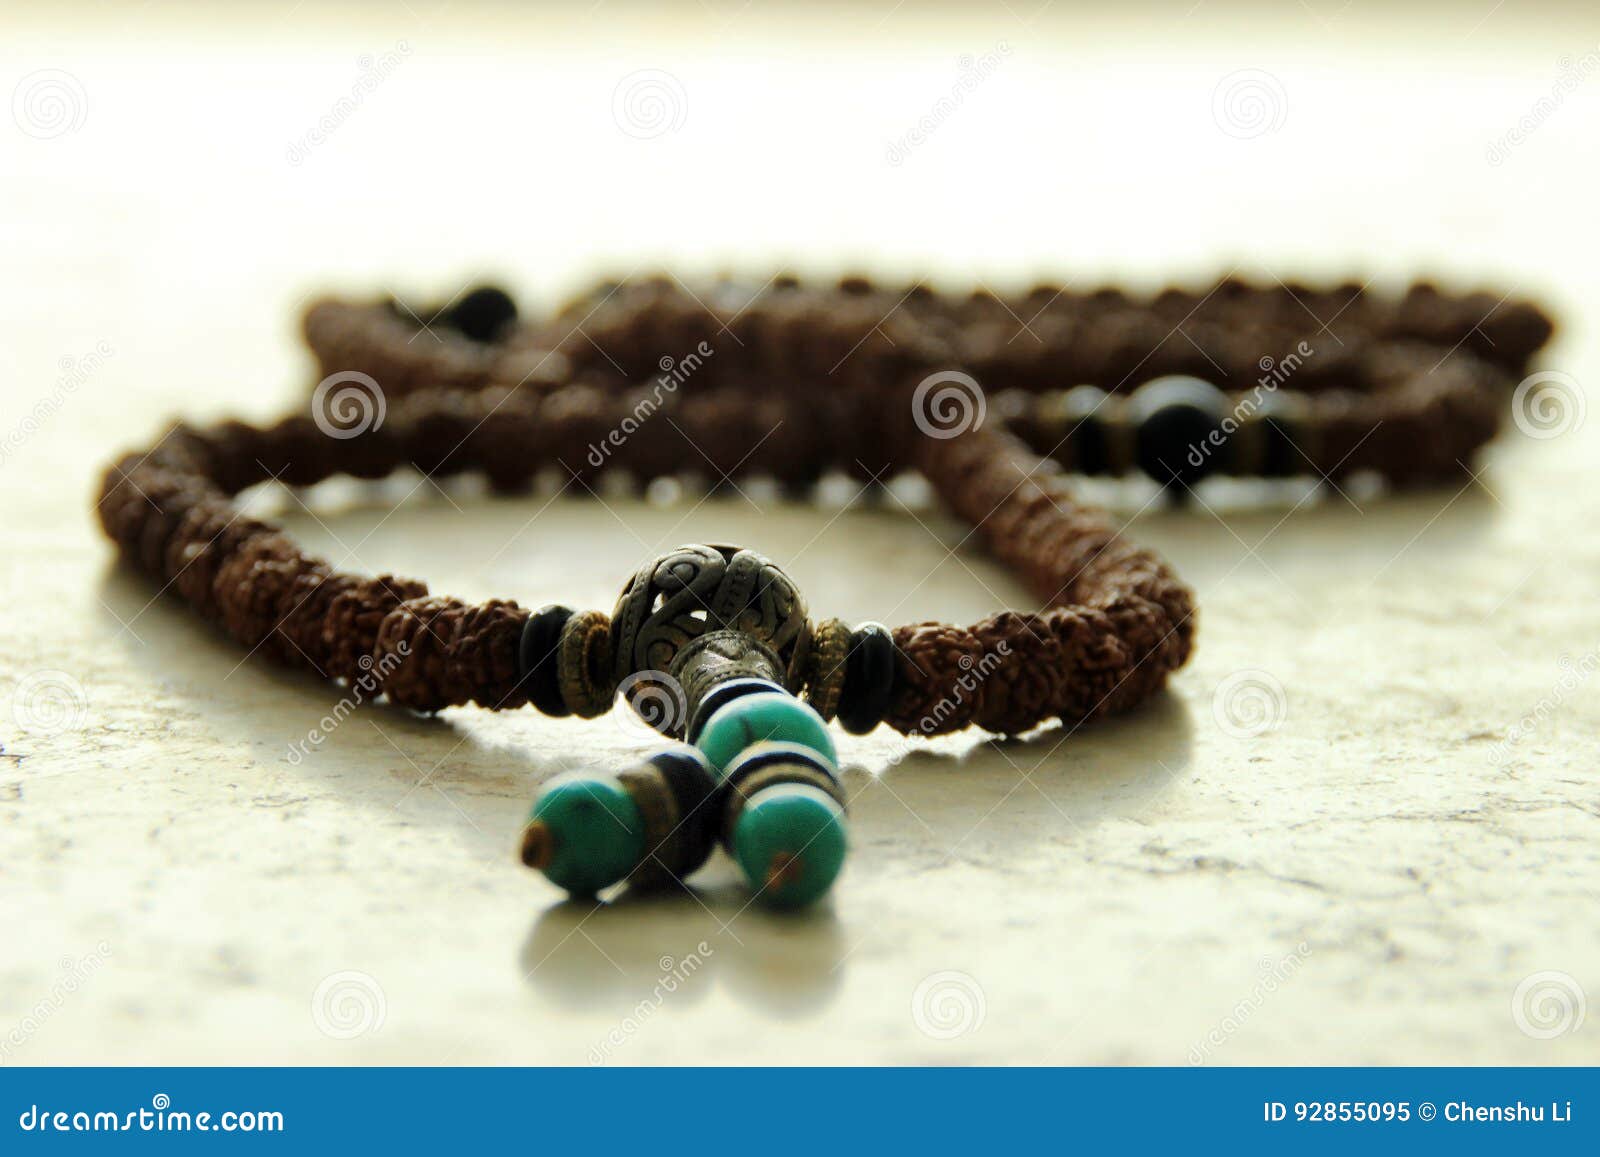 Tibetan Prayer Beads, Arts and Crafts Background Stock Image - Image of ...